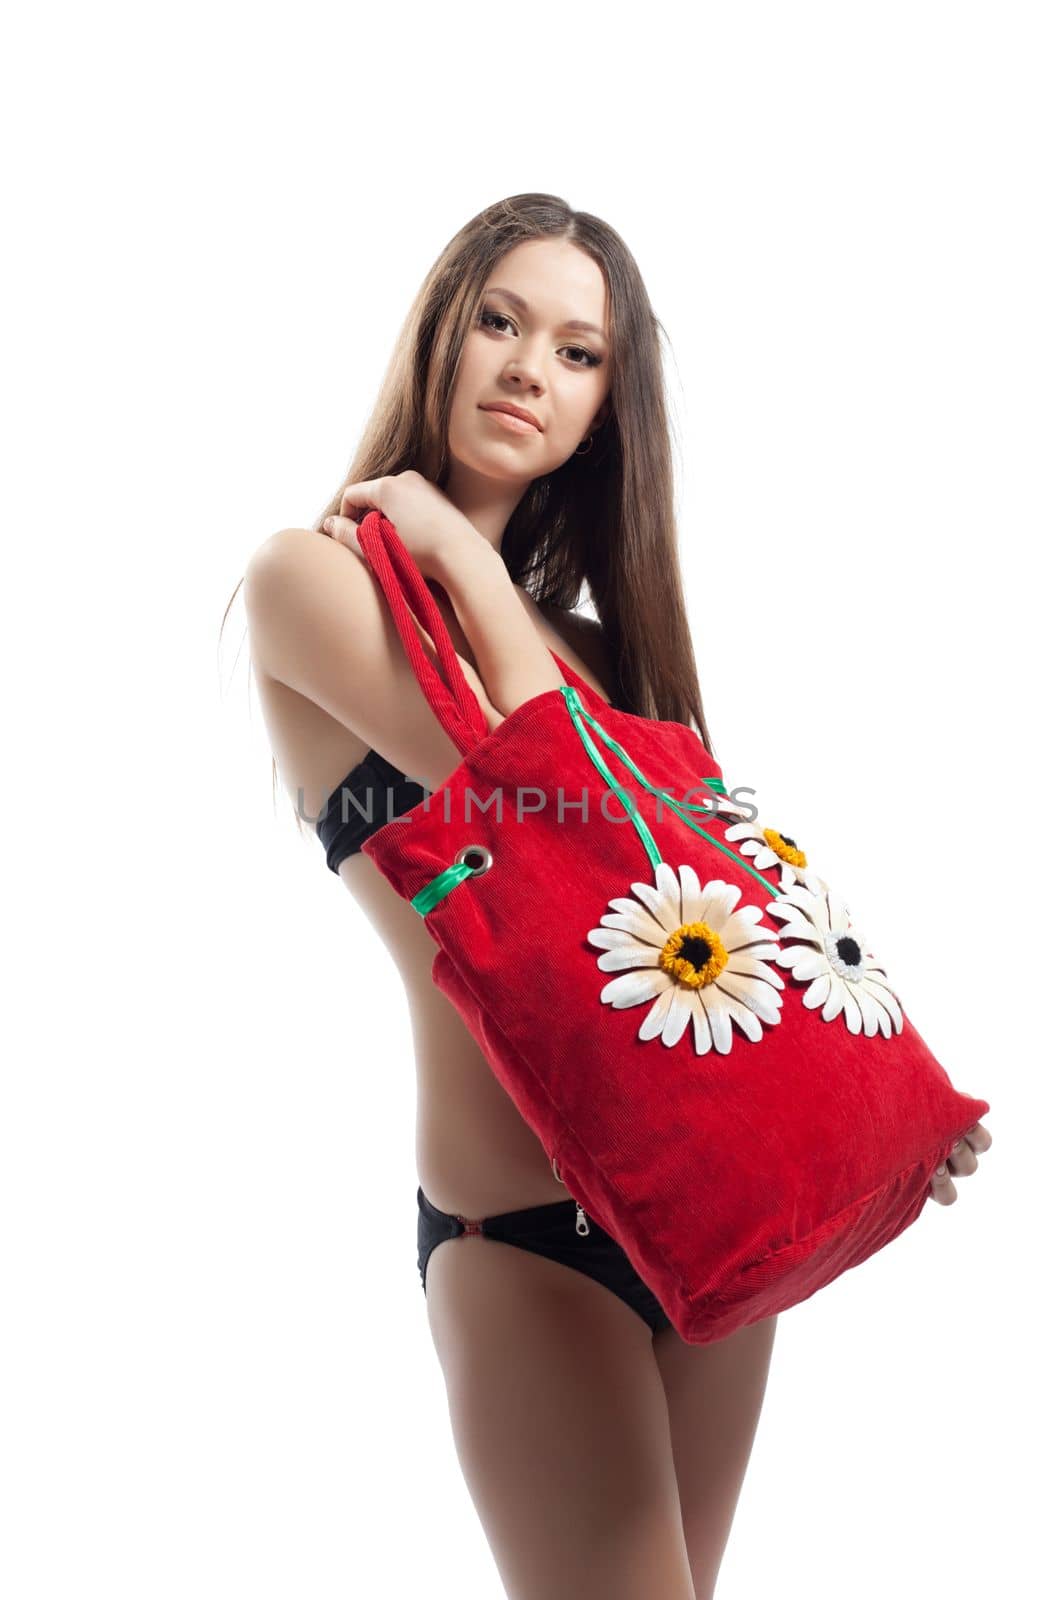 Yong woman show her red beach bag isolated in black bikini